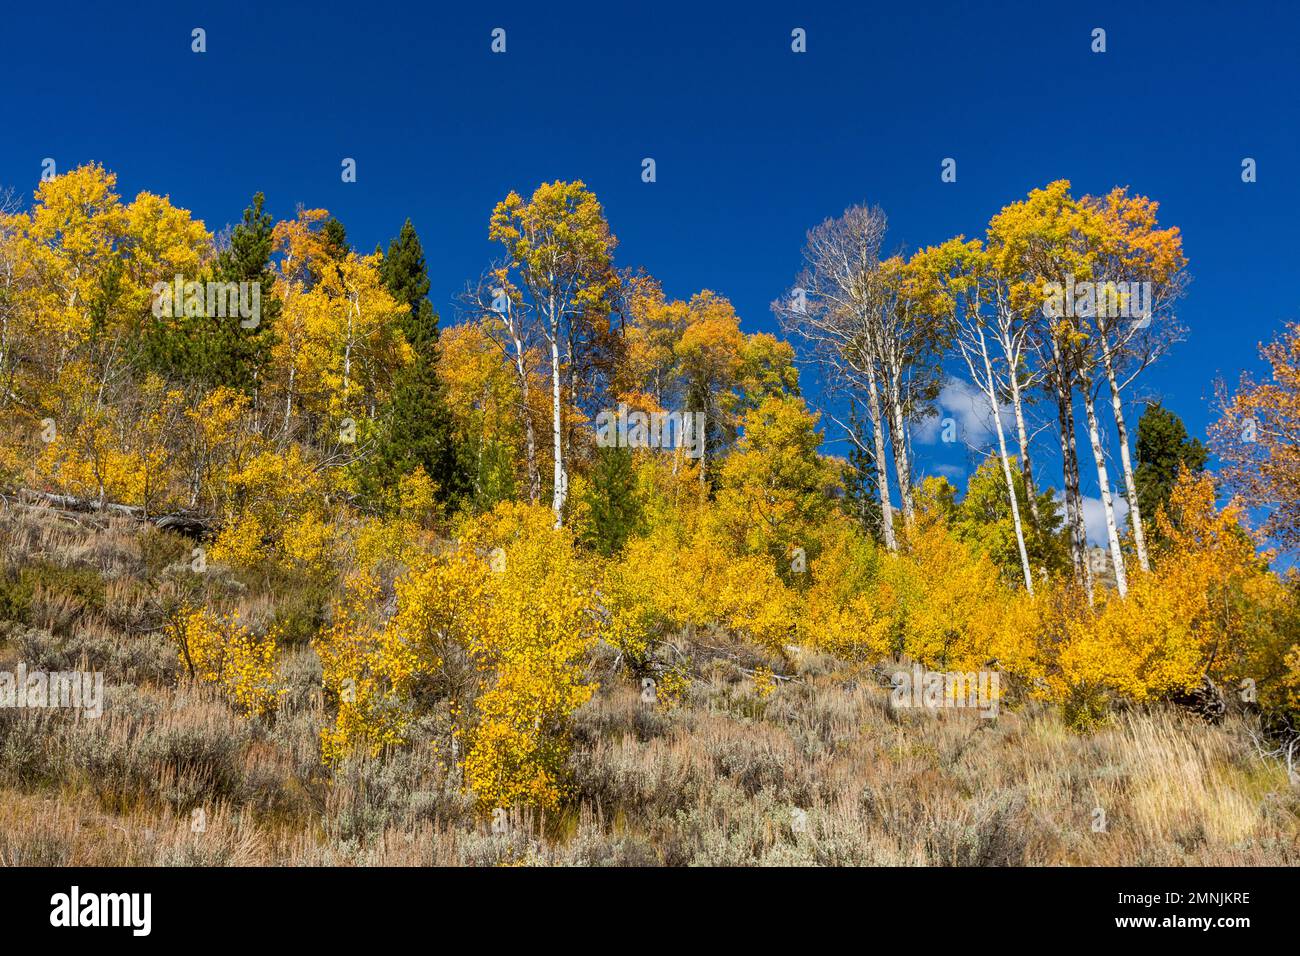 USA, Idaho, Stanley, Yellow leaves on trees in mountains at autumn Stock Photo